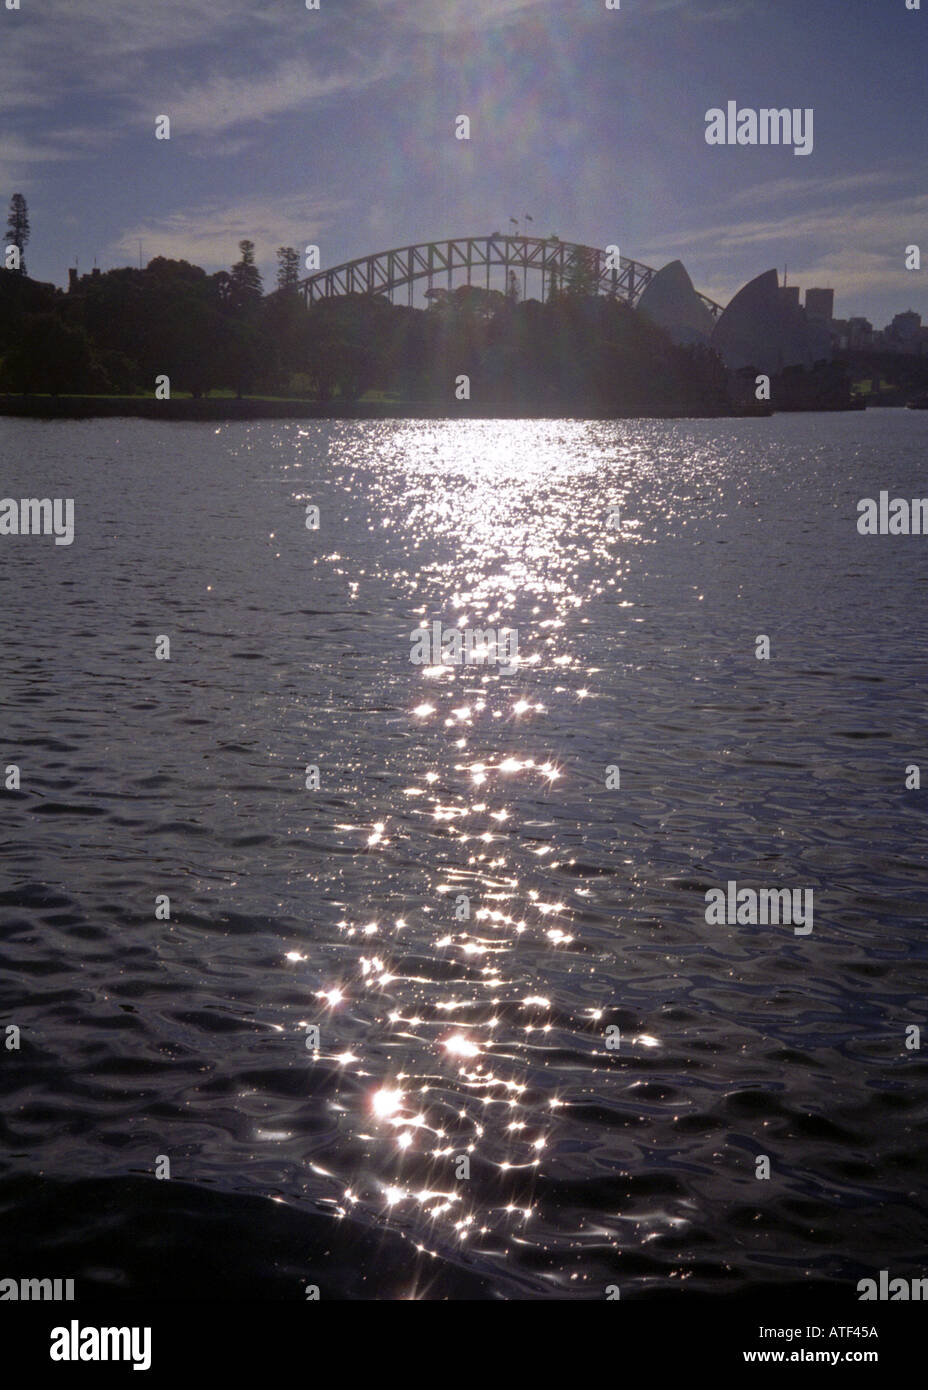 Suggestive atemberaubenden farbenfrohen Sonnenuntergang Naturschauspiel Displaybeleuchtung Phänomen Ray-Sydney Sidney New South Wales Australien Stockfoto